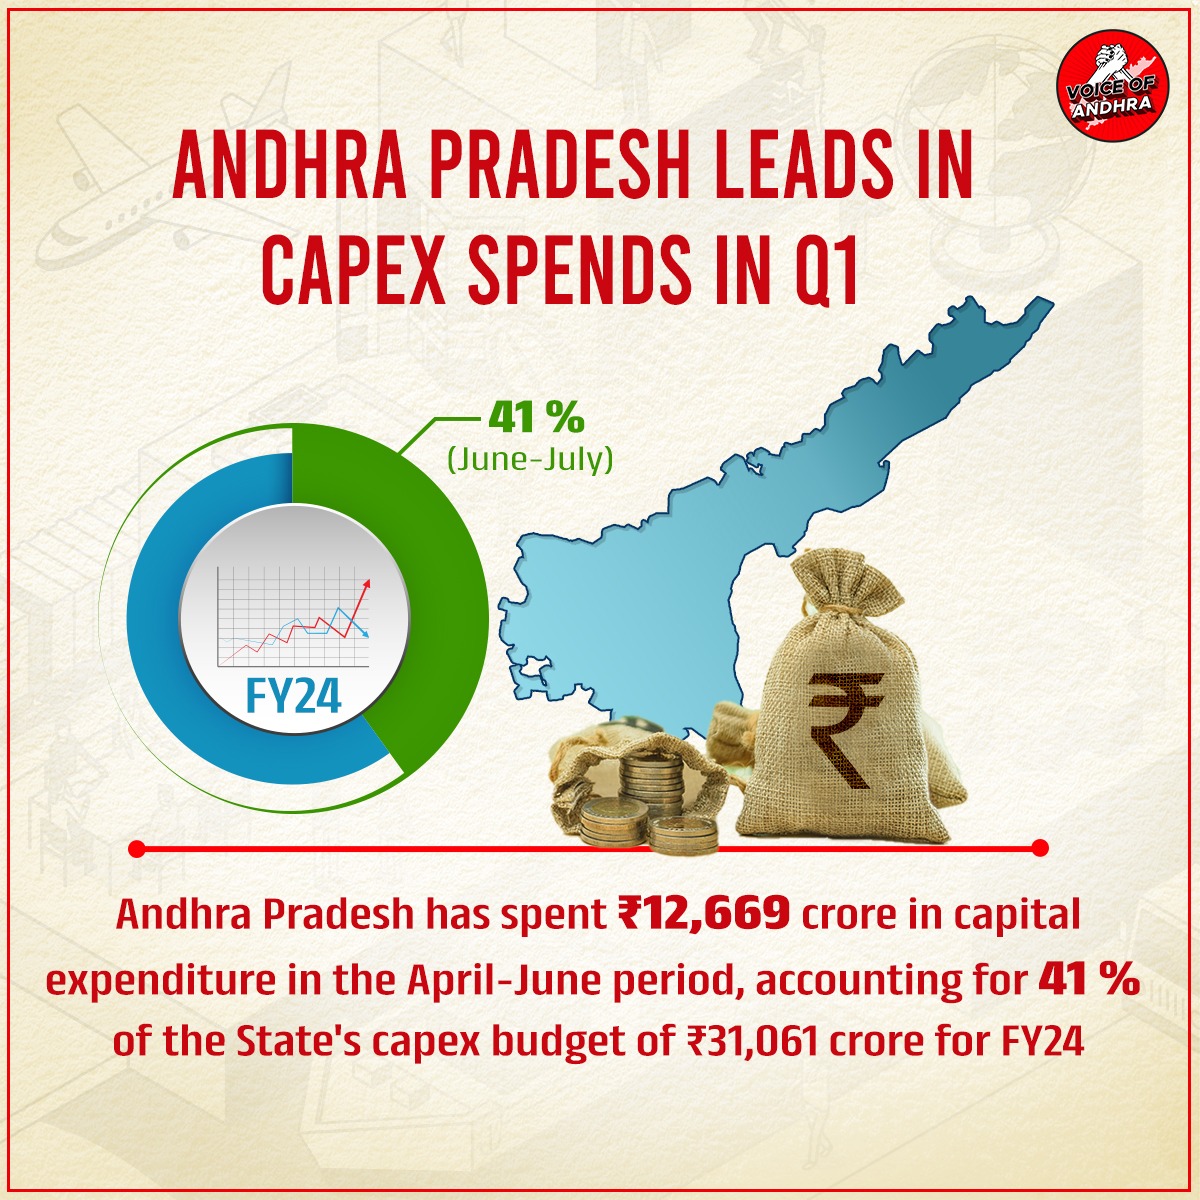 Q1 Capital Expenditure Rankings: Andhra Pradesh Takes the Lead, While Karnataka, Maharashtra, and UP Lag Behind
#AndhraPradesh #risingandhra #apdevelopment #apgovt #capex #capitalexpenditure